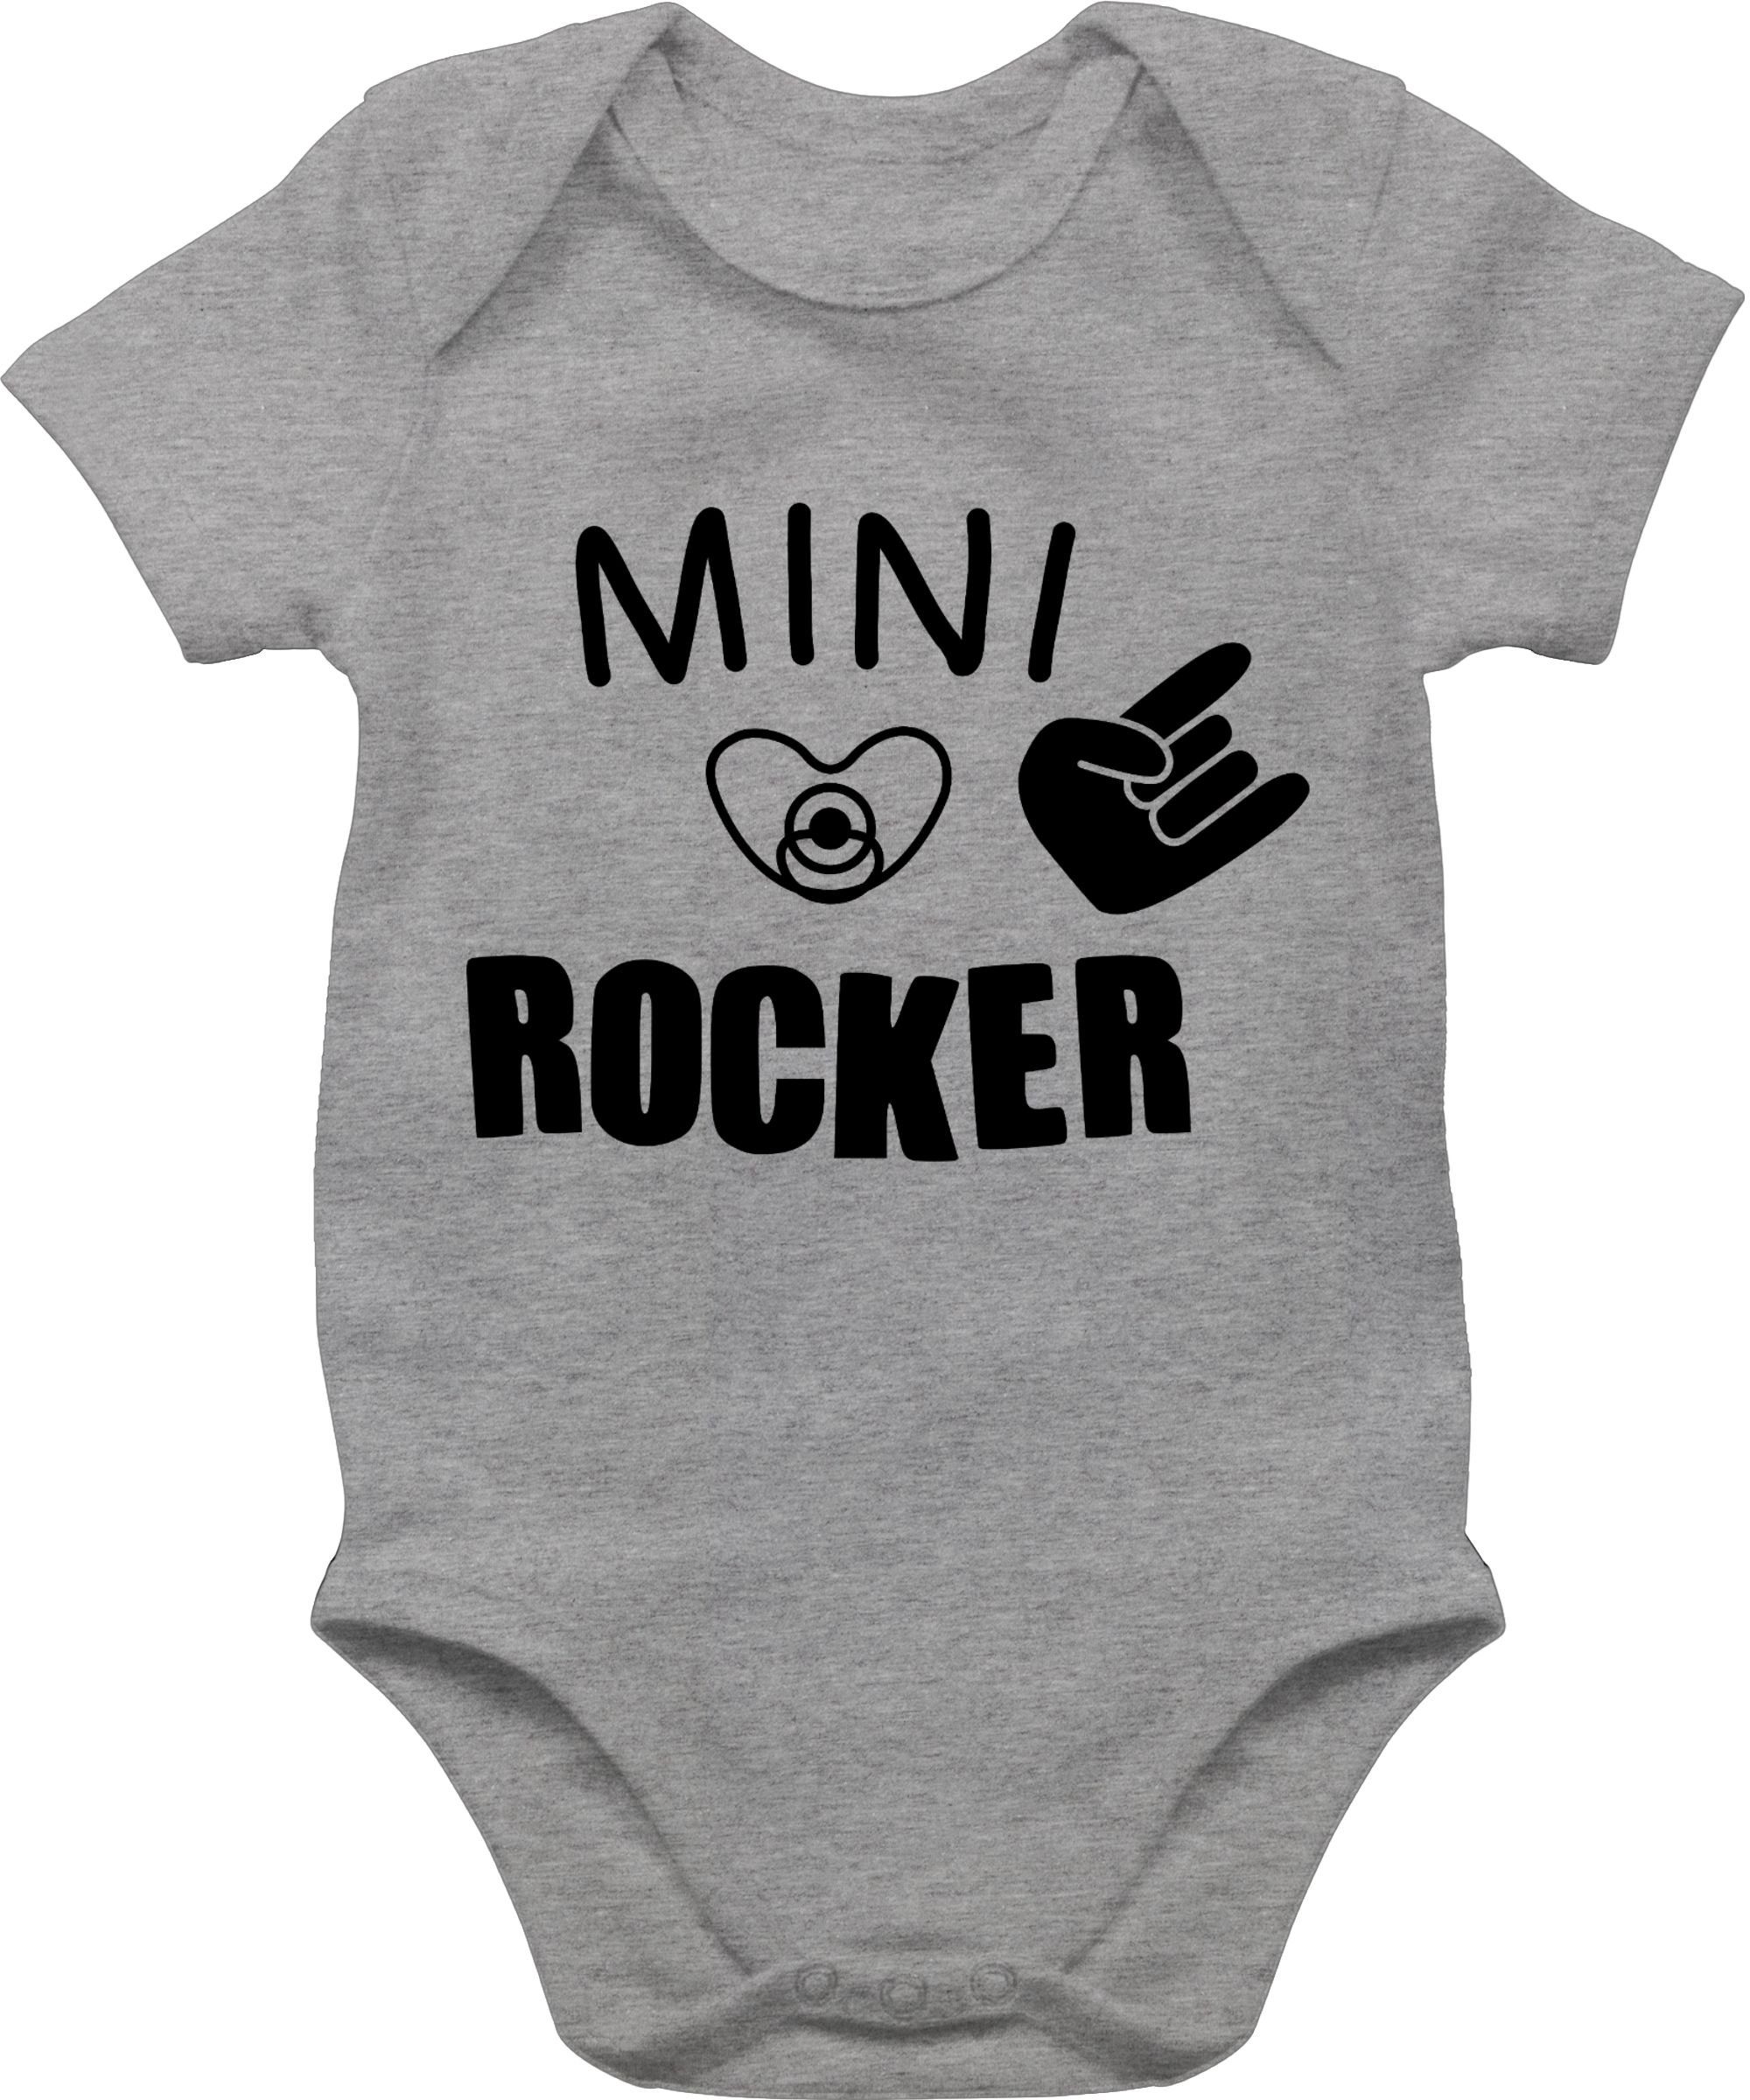 Shirtracer Shirtbody Mini Rocker Strampler Baby Mädchen & Junge 1 Grau meliert